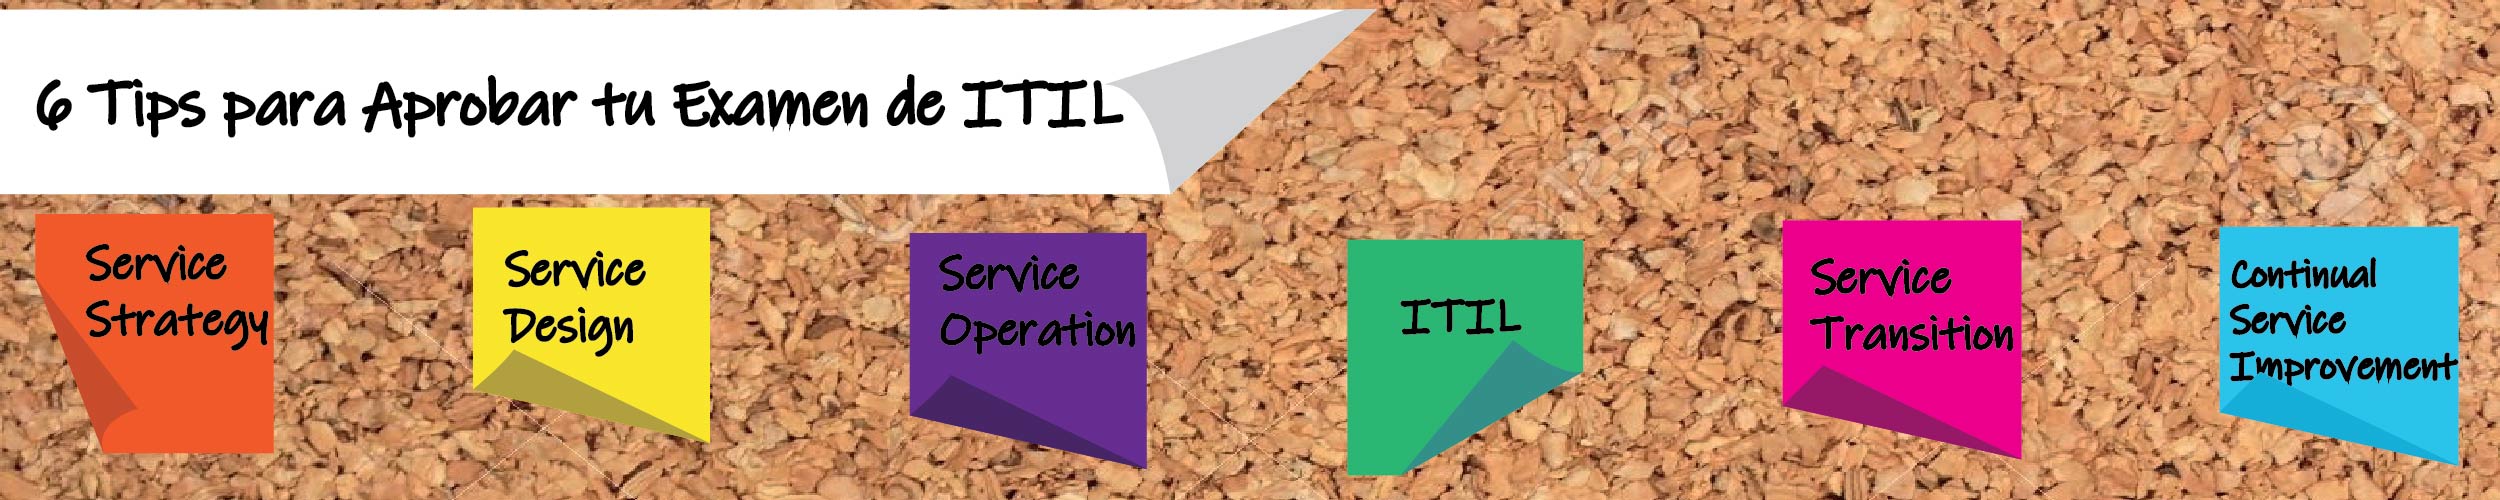 6 TIps para aprobar tu examen de ITIL